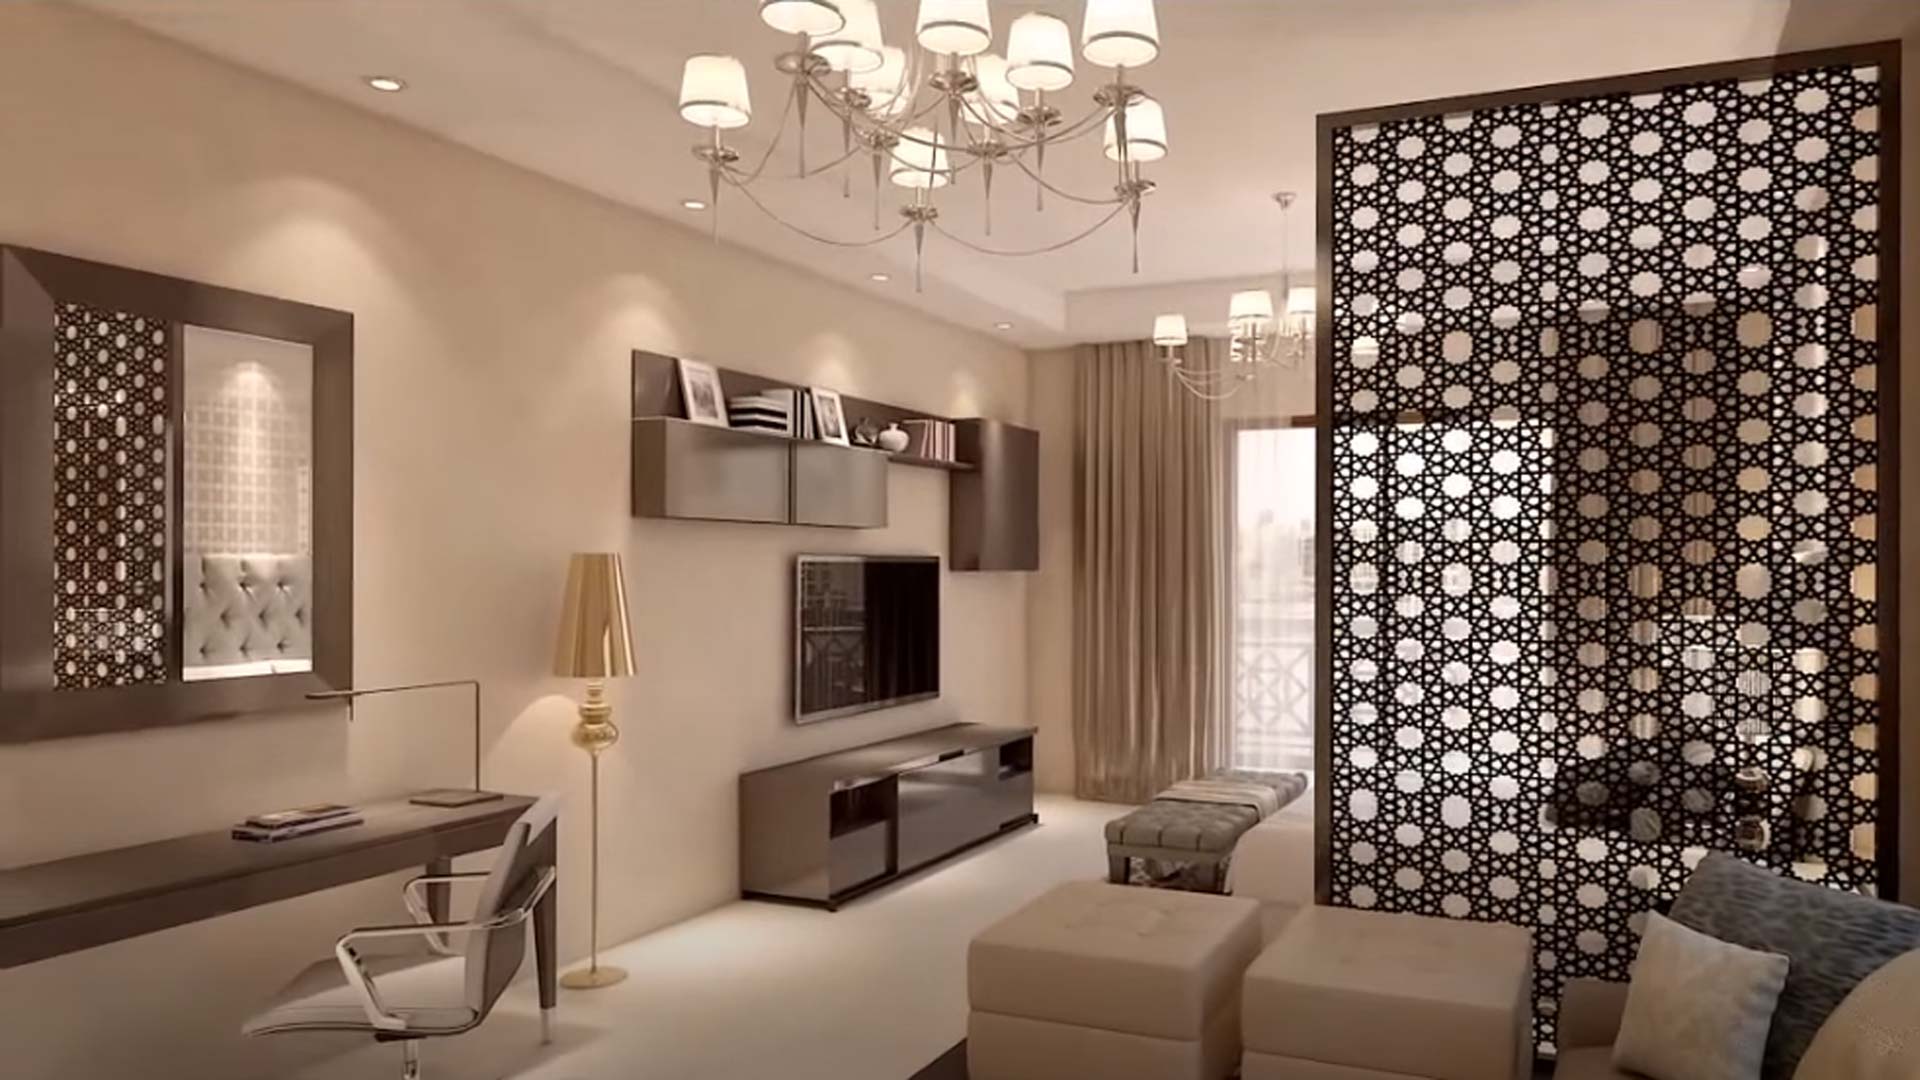 Apartment for sale in Culture Village, Dubai, UAE, 1 bedroom, 102 m², No. 25394 – photo 1